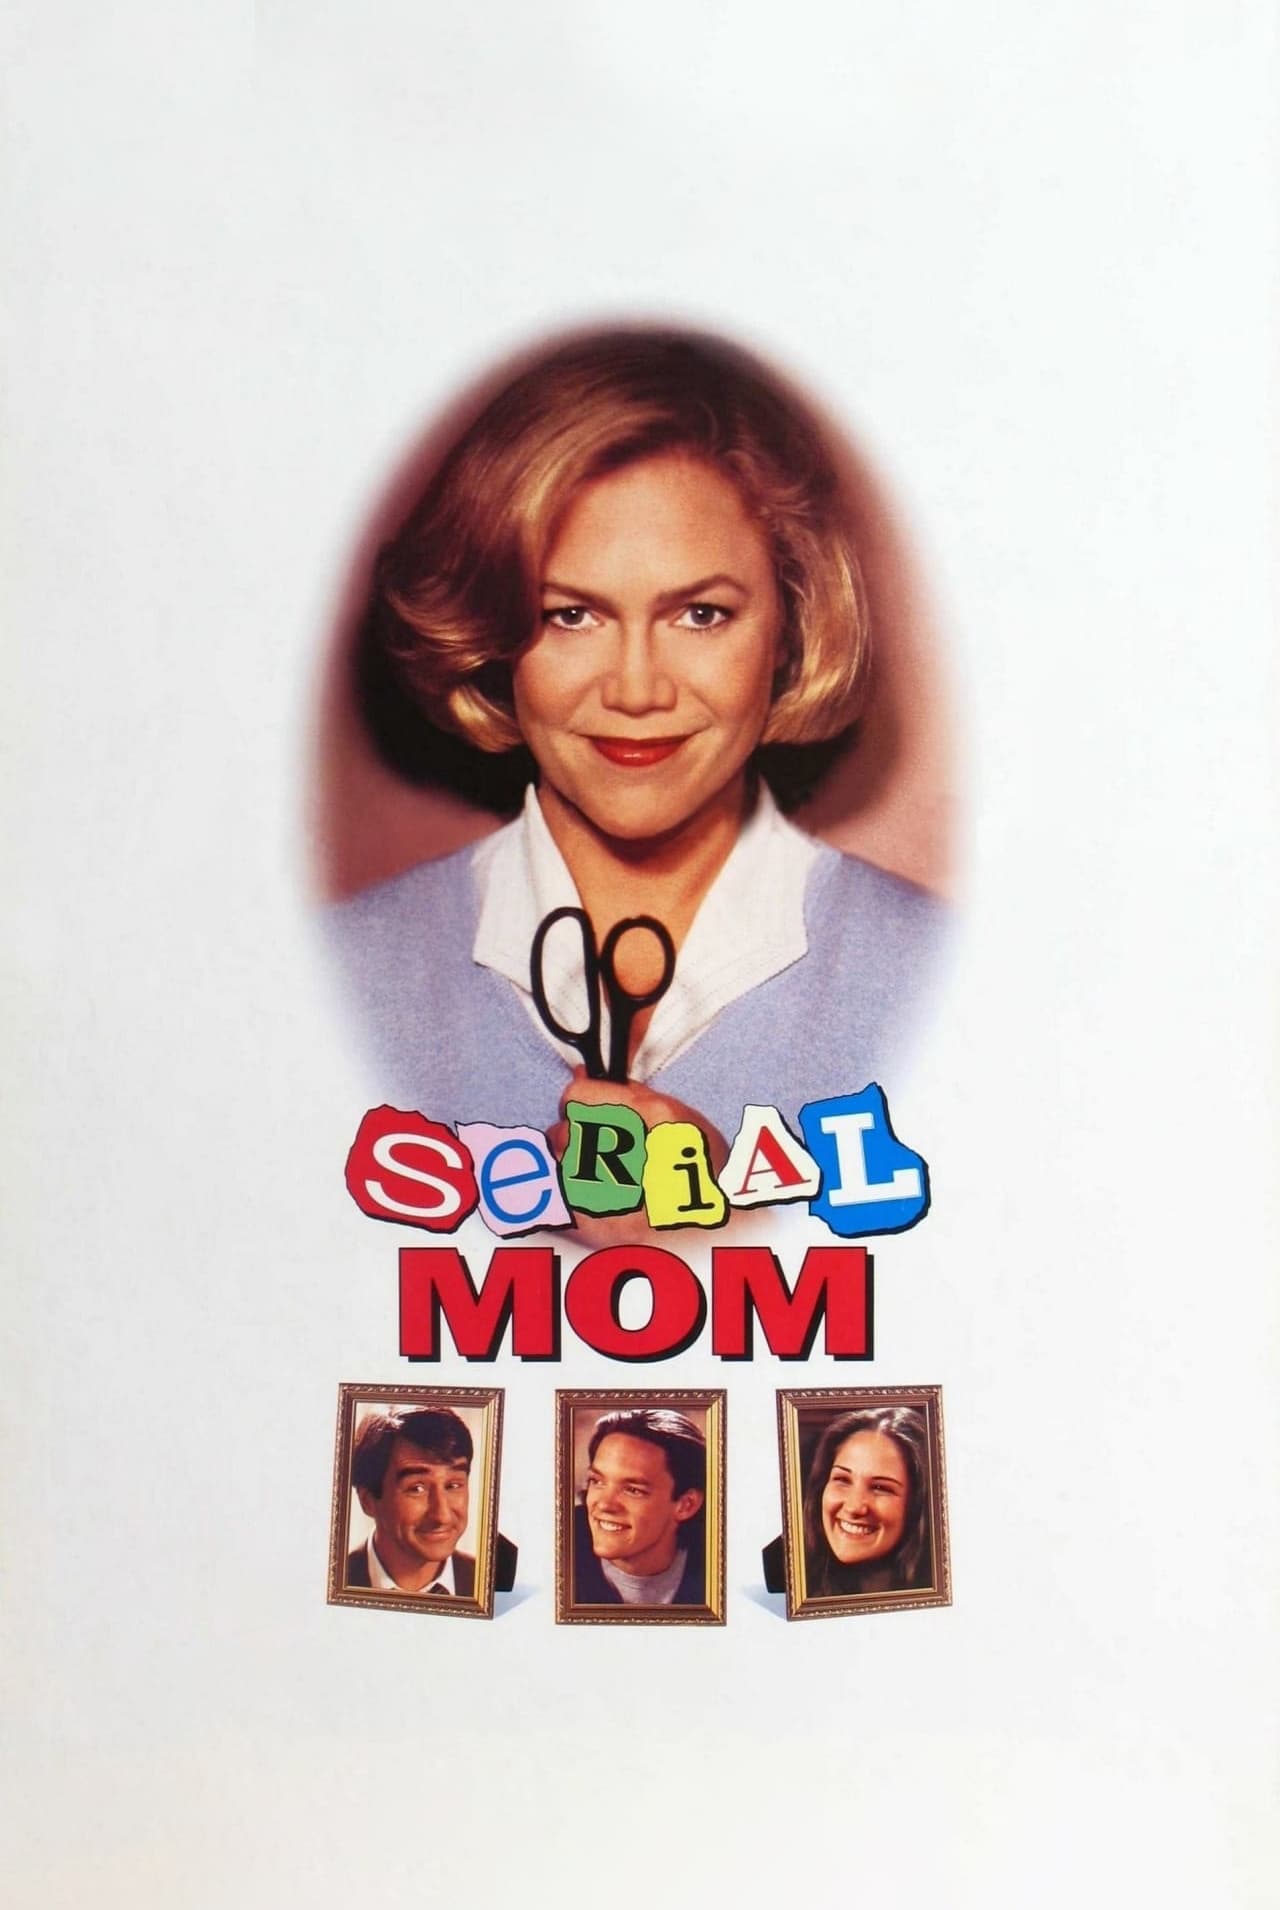 Serial Mom (1994)